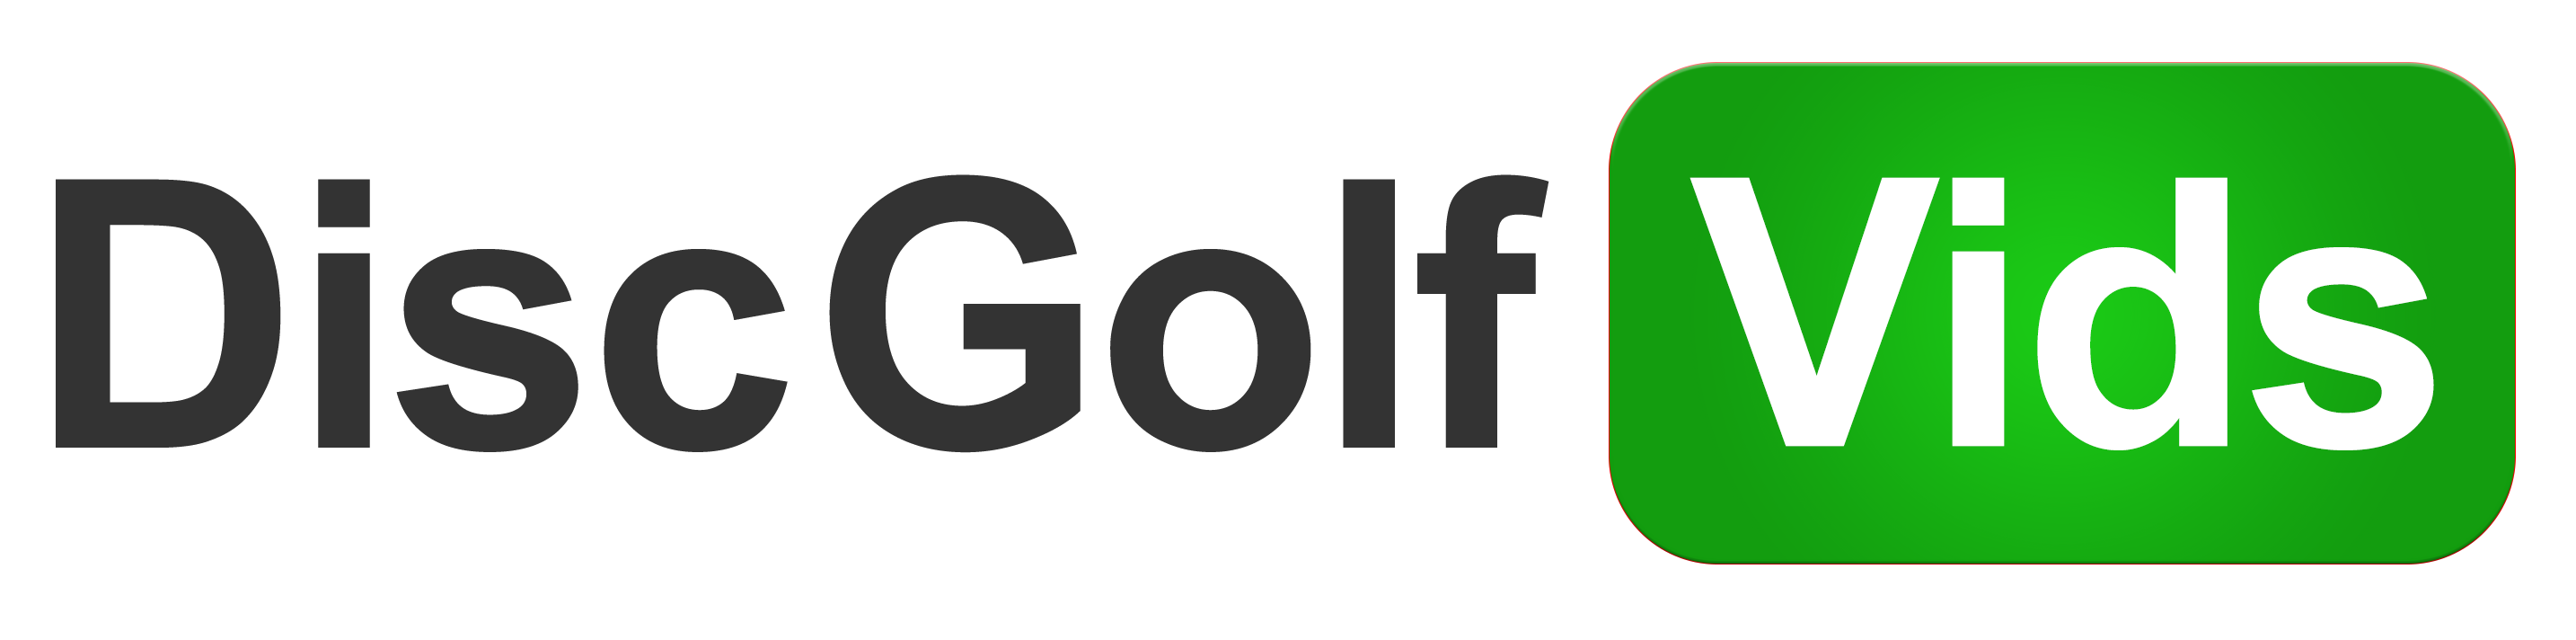 DiscGolfVids.com - Disc Golf Video Sharing Platform